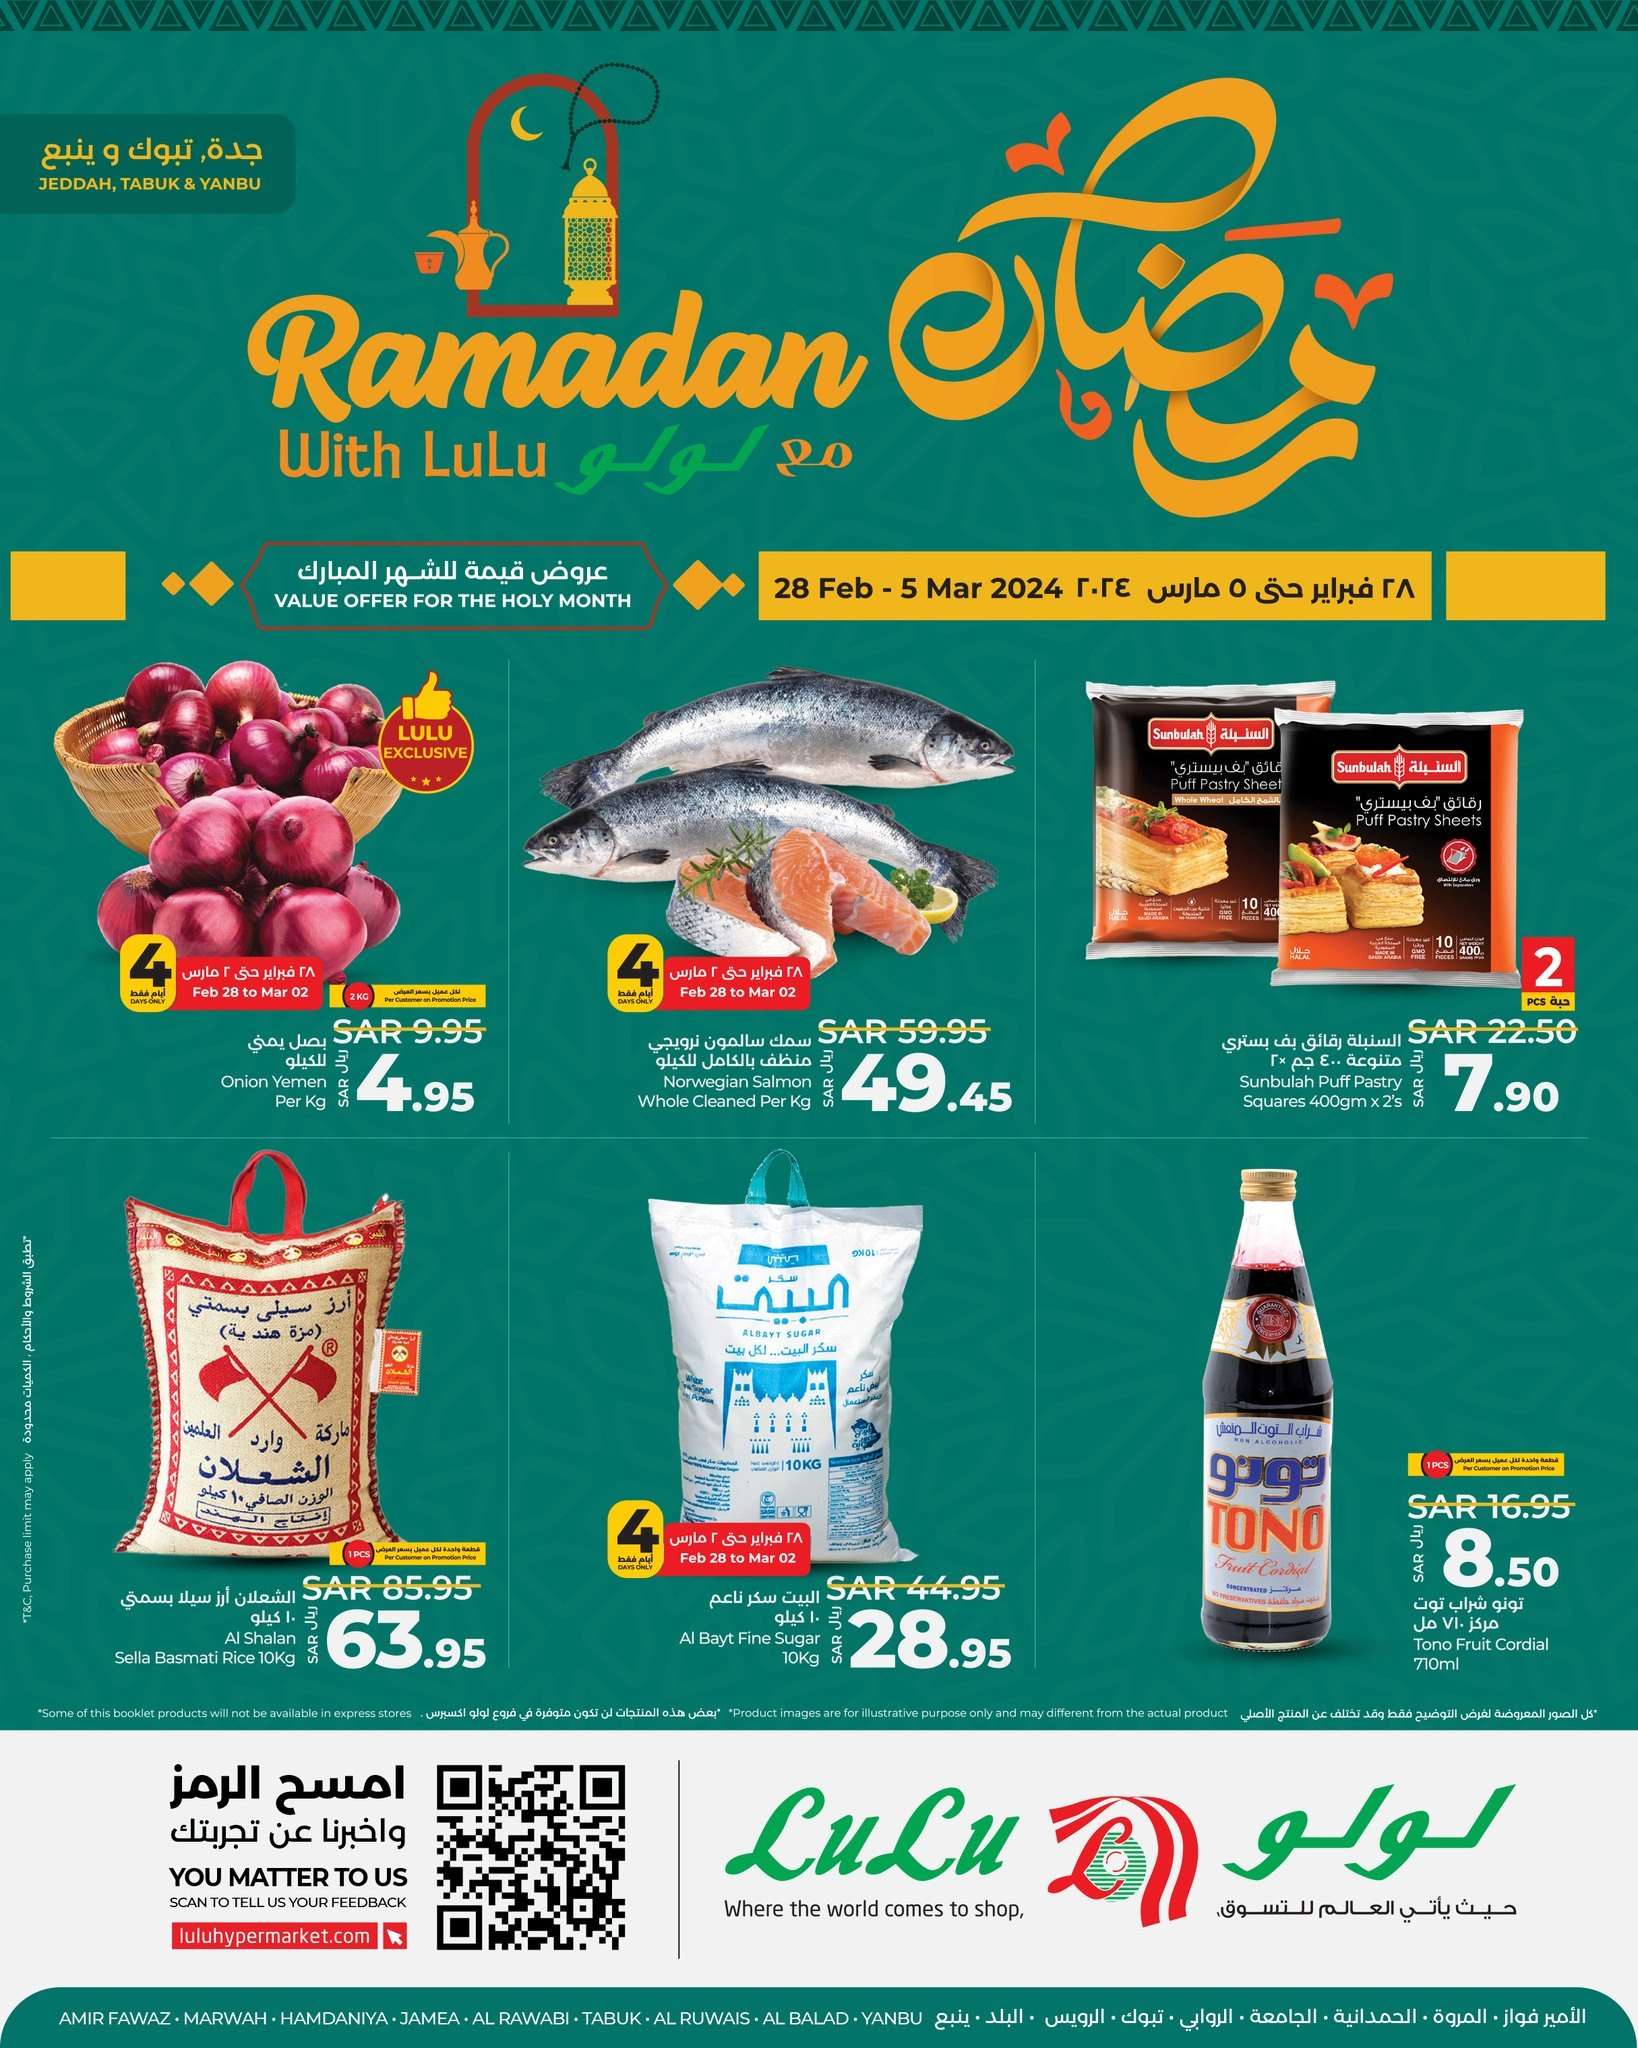 QhsFS3 - عروض رمضان 2024 : عروض لولو جدة الأسبوعية الأربعاء 28 فبراير 2024 صفحة واحدة